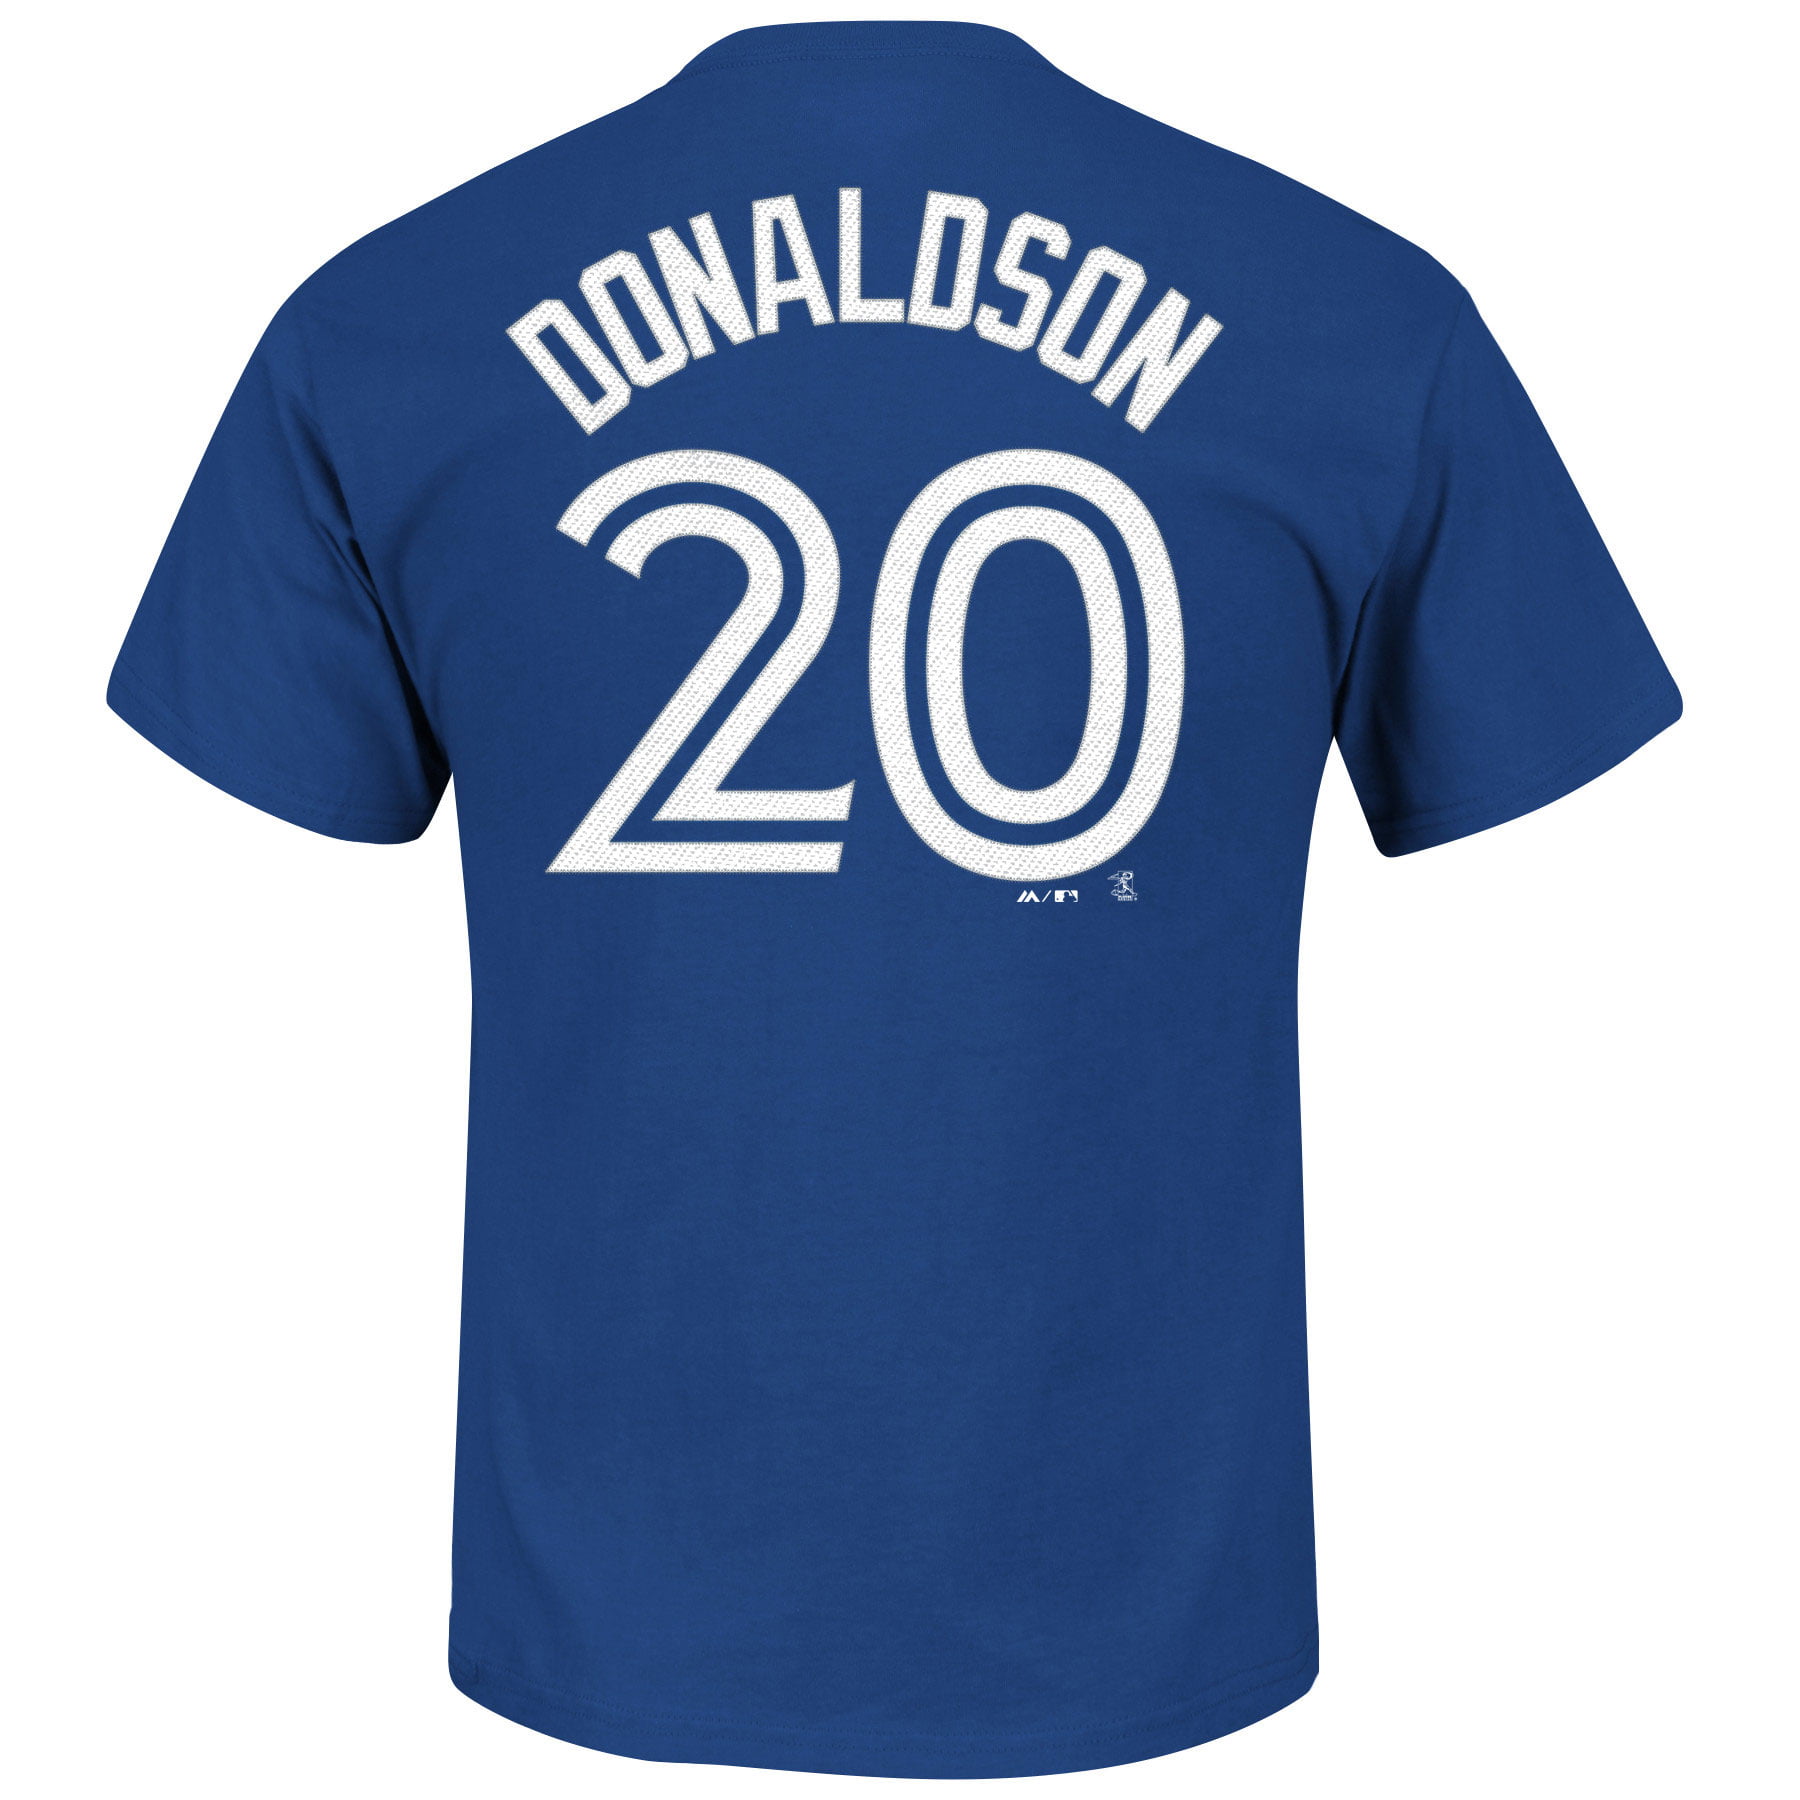 josh donaldson jersey number